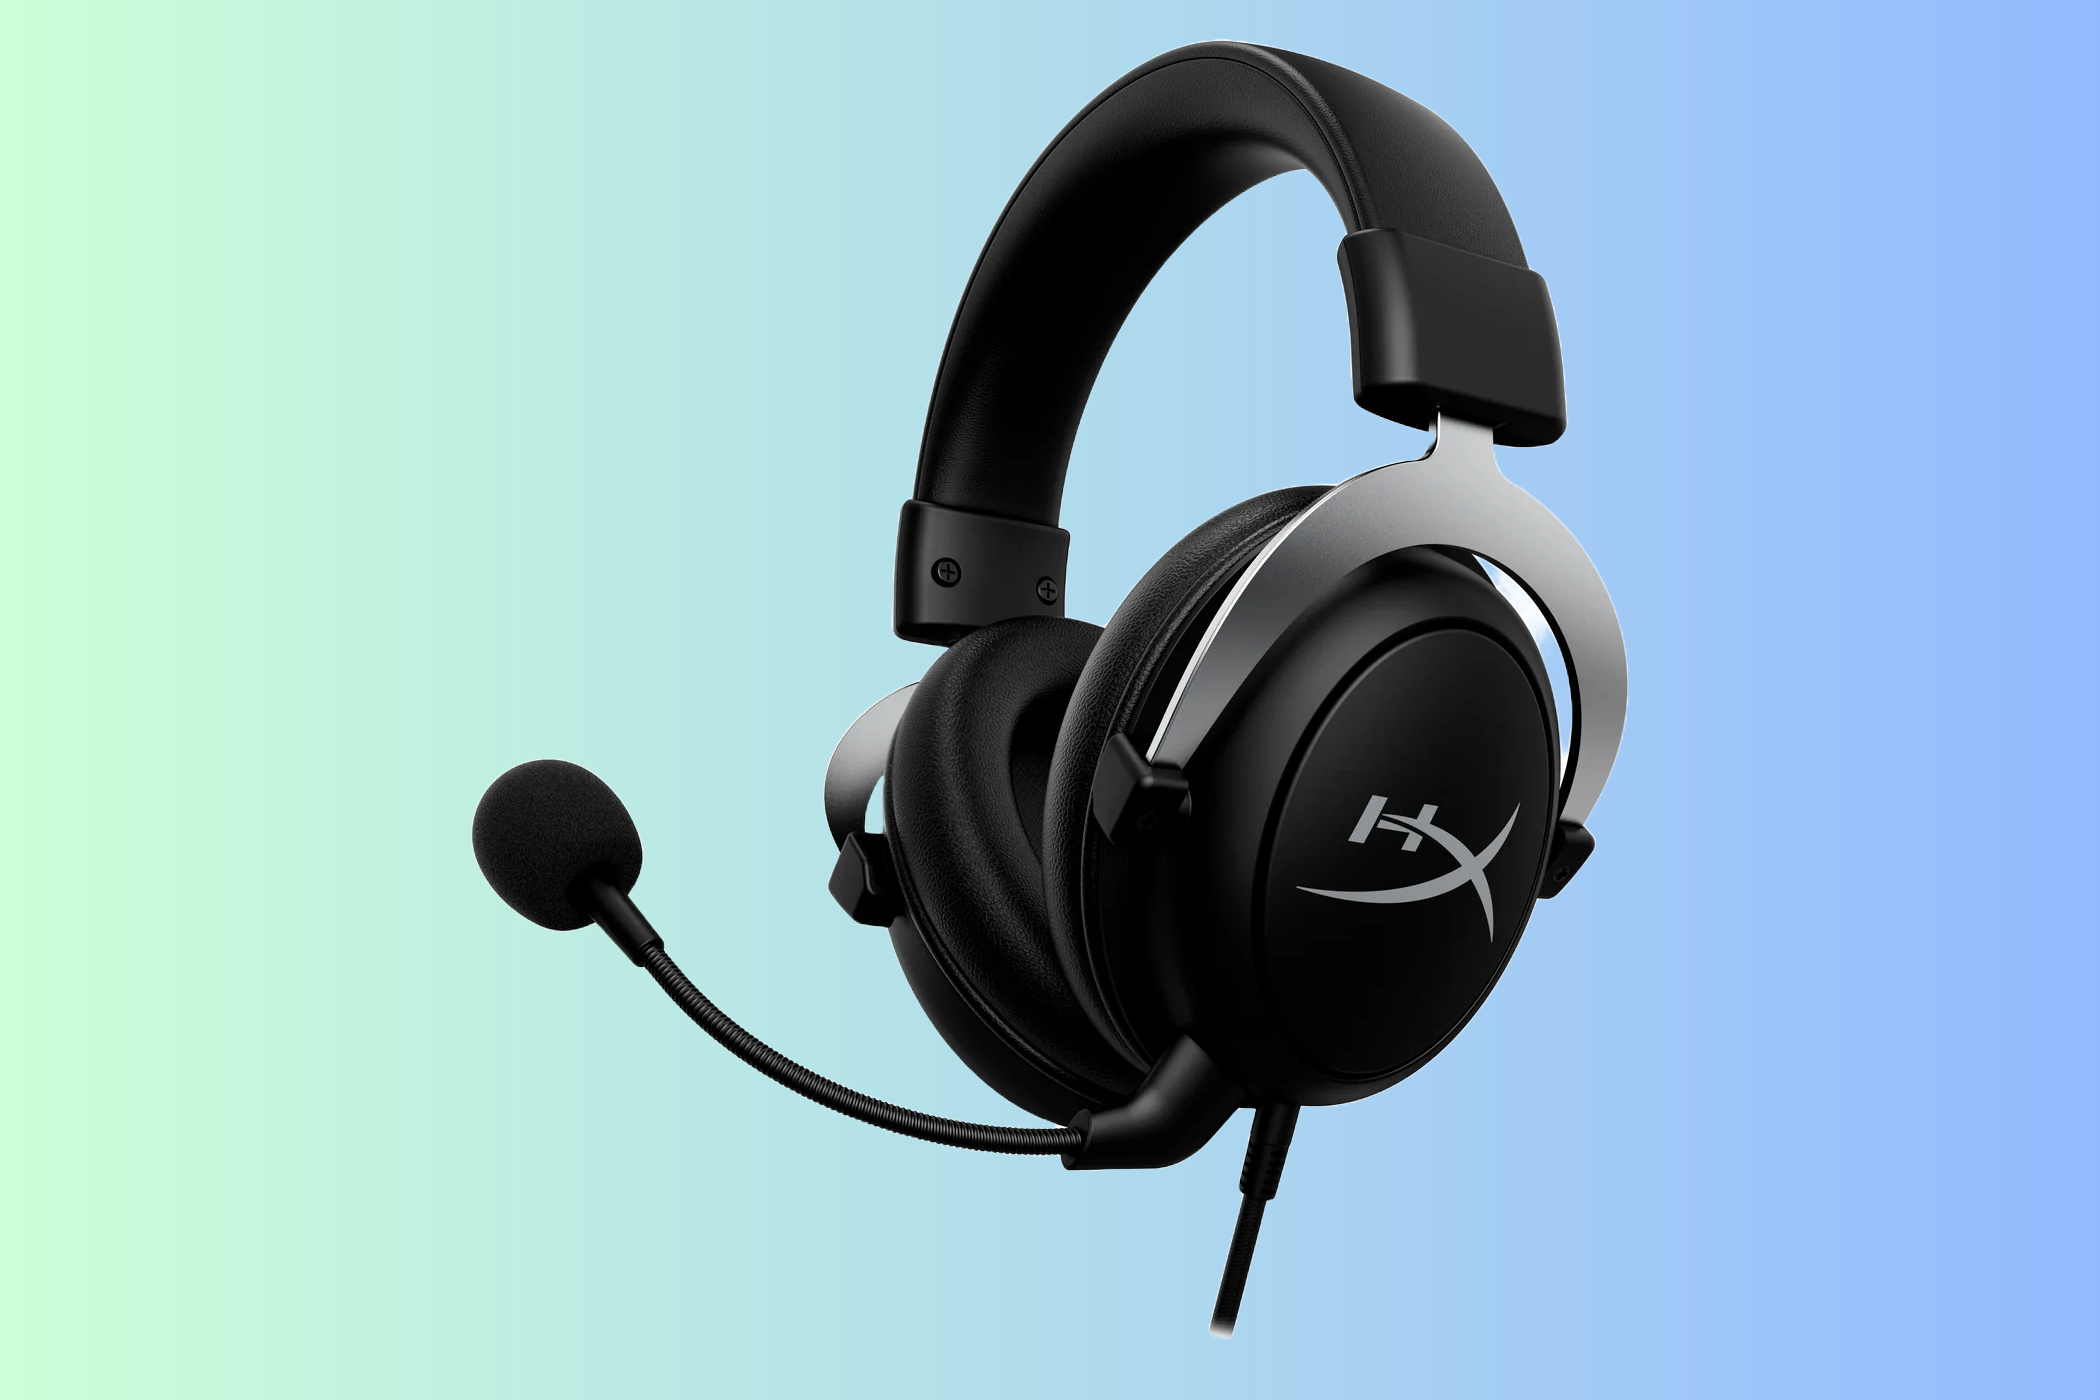 HyperX Cloudx headset against a greenish blue background